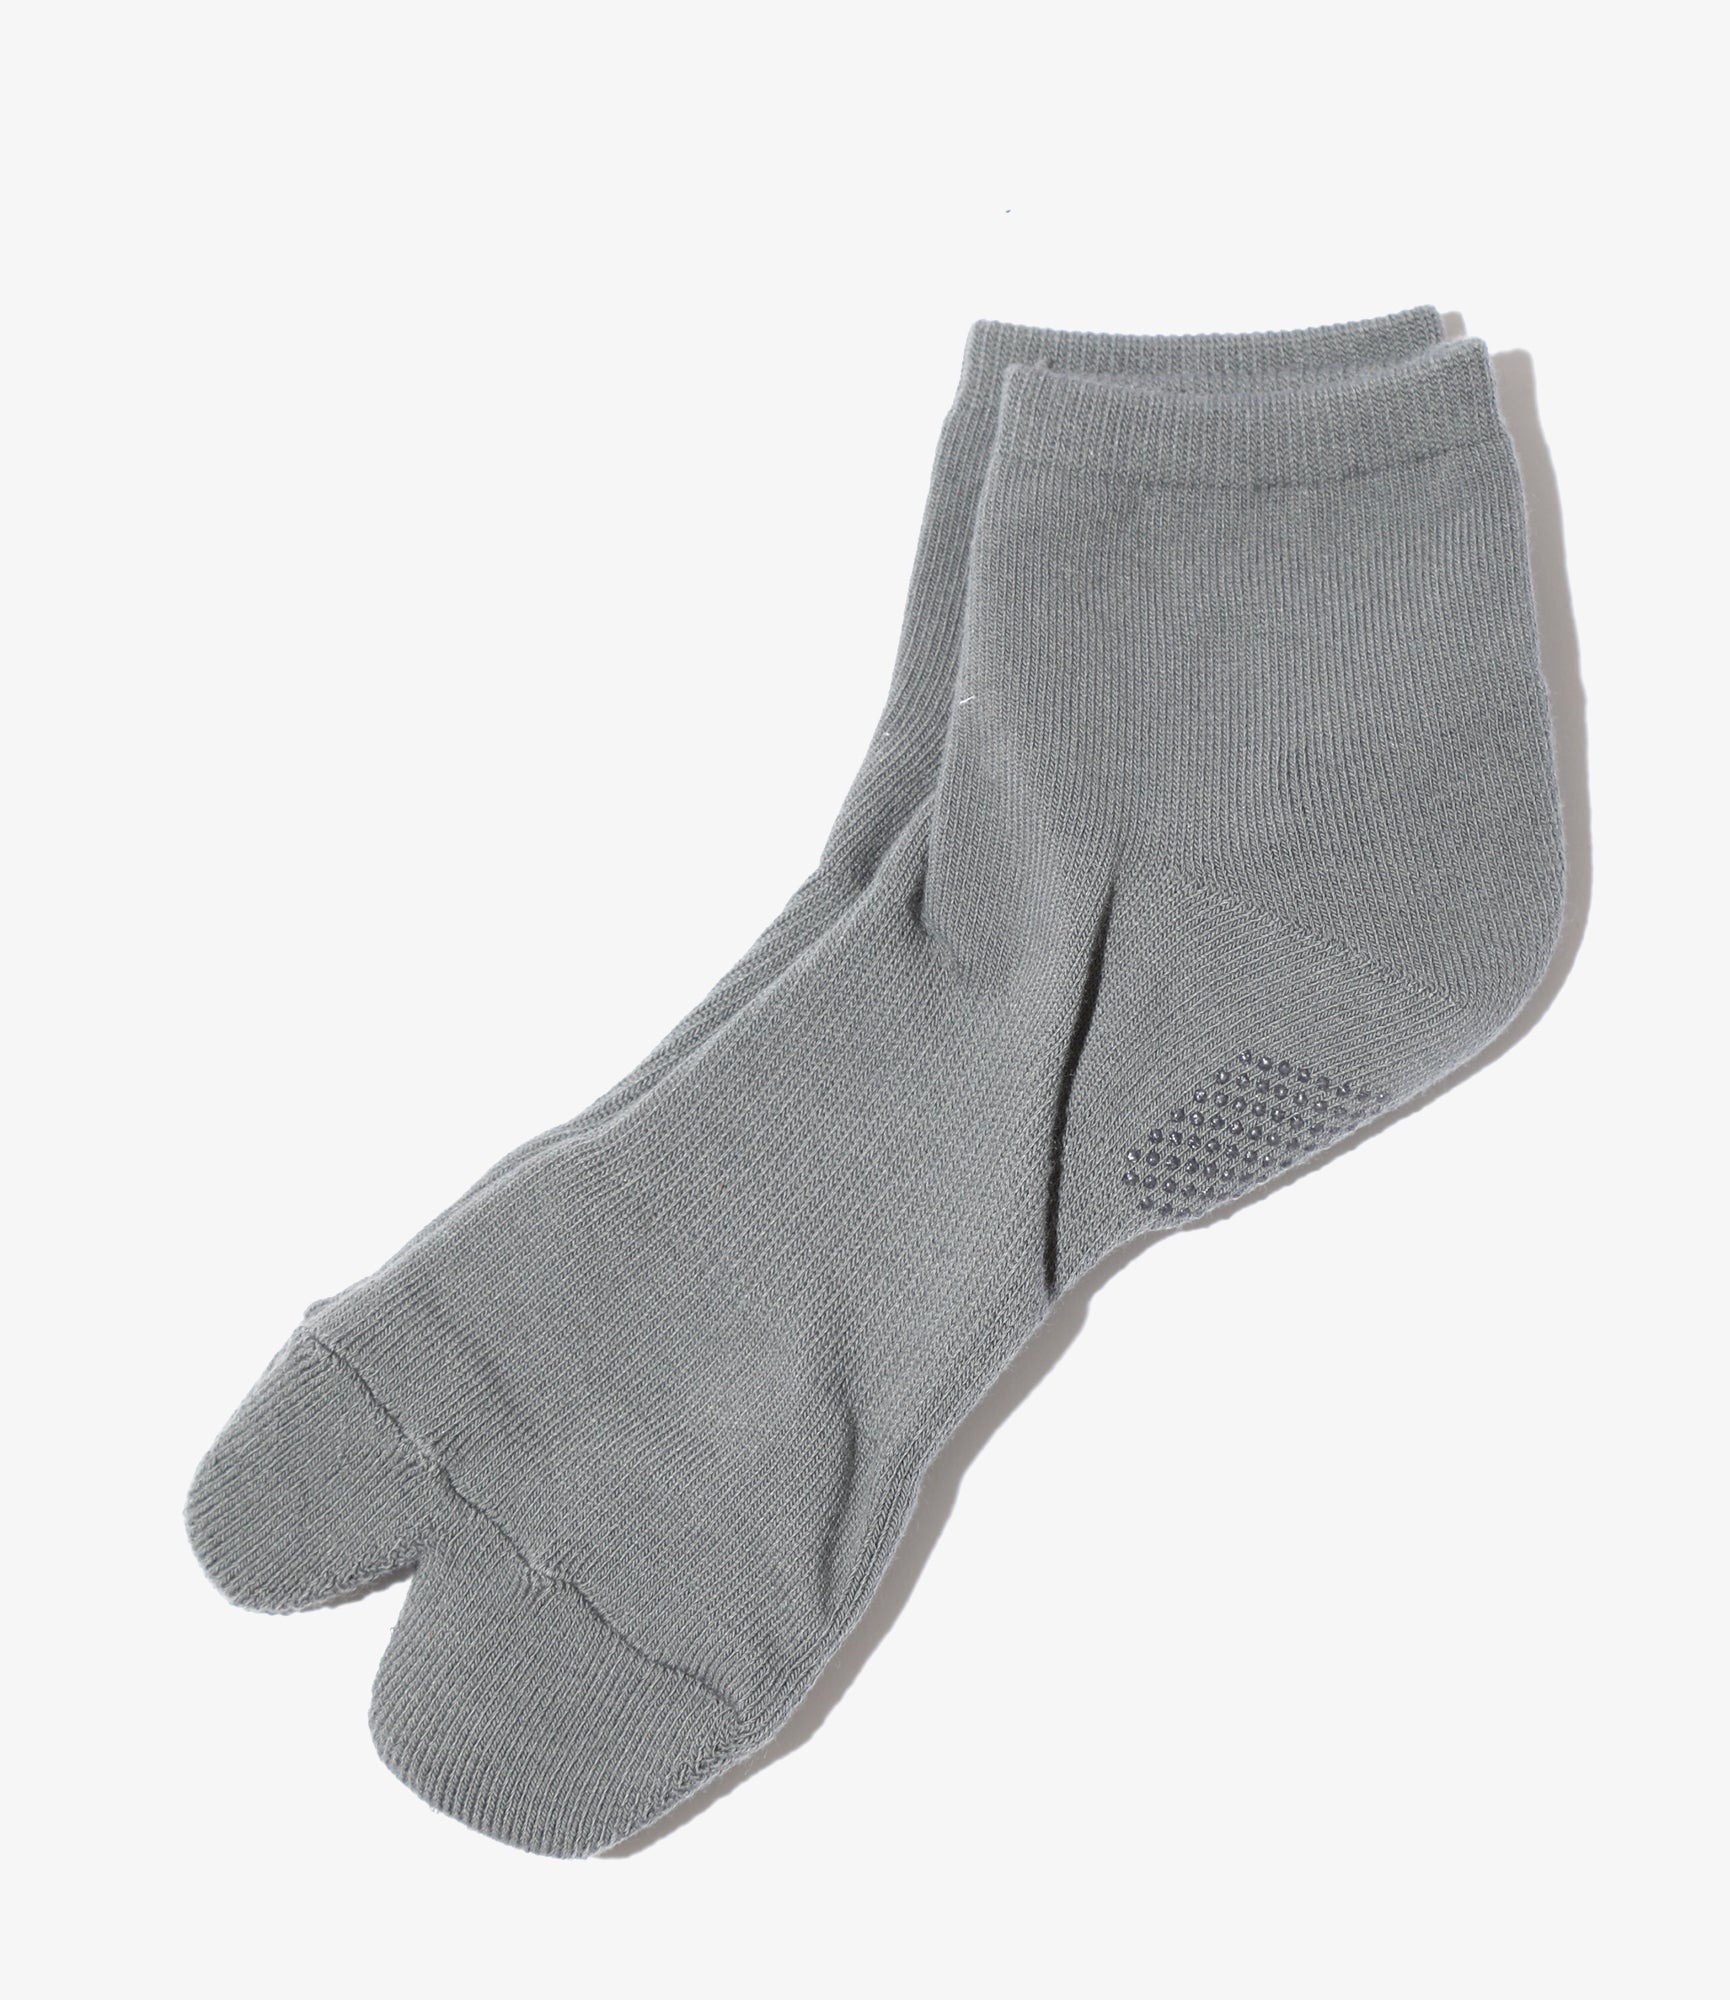 Thumb Ankle Socks - Charcoal - Cool Max